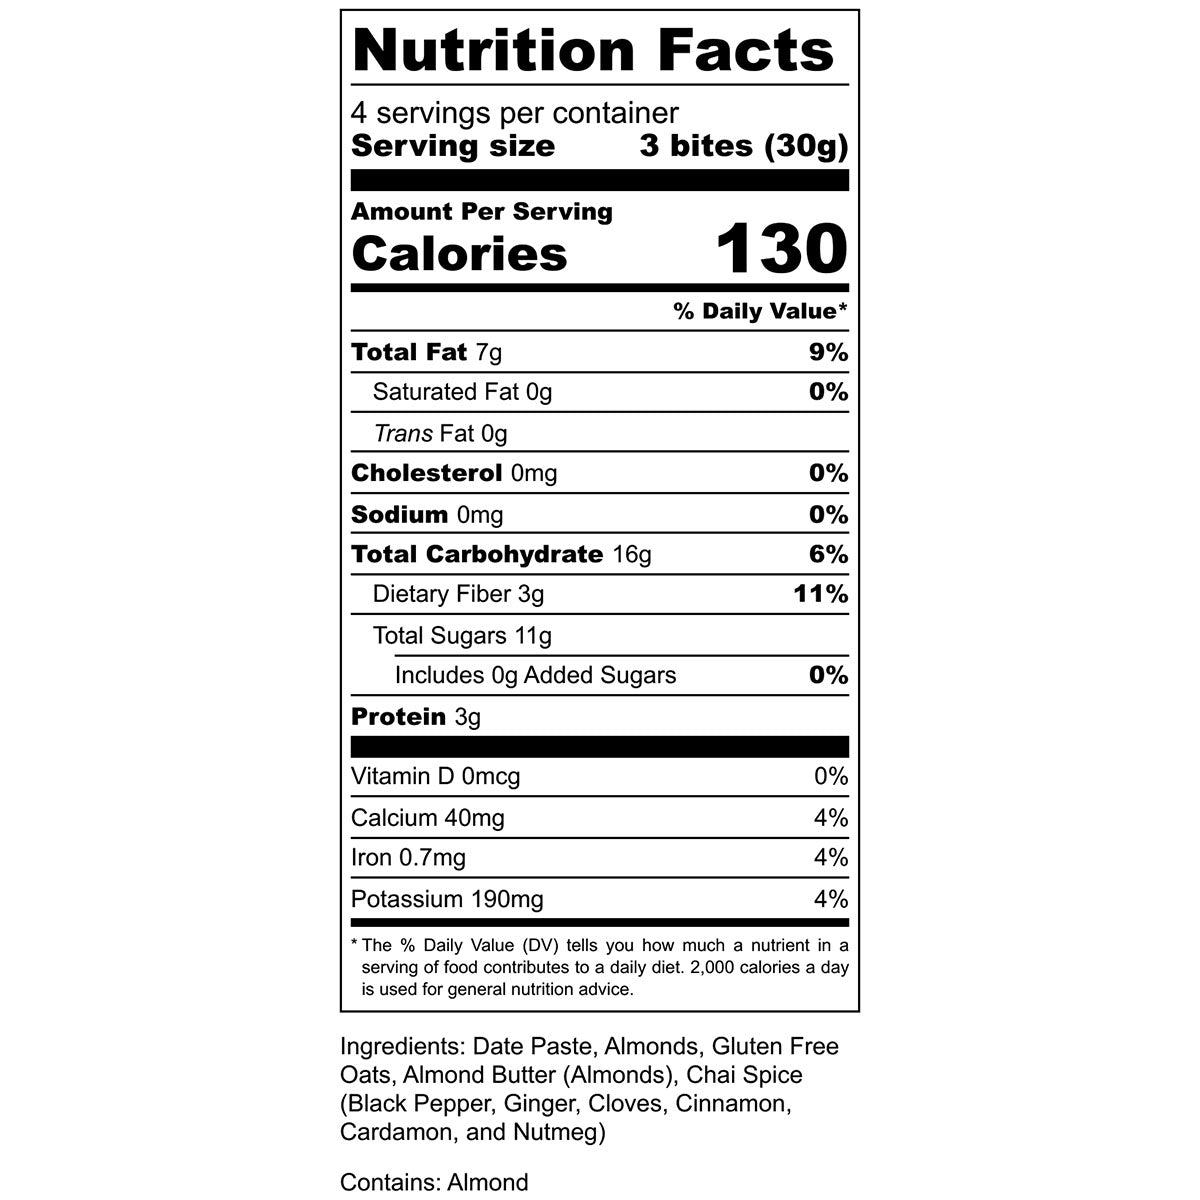 "Nutrition: 3 bites, 130 cal, 7g fat, 16g carbs, 3g protein." 